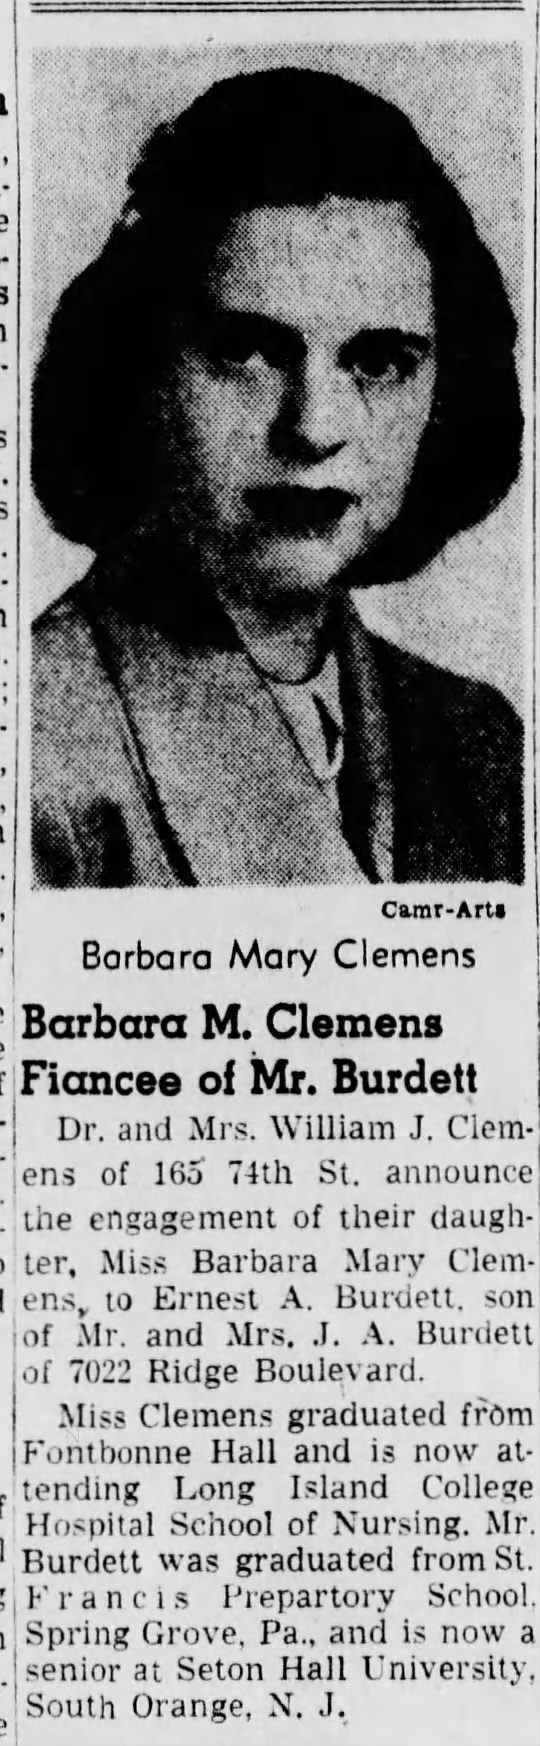 The Brooklyn Daily Eagle November 23, 1952